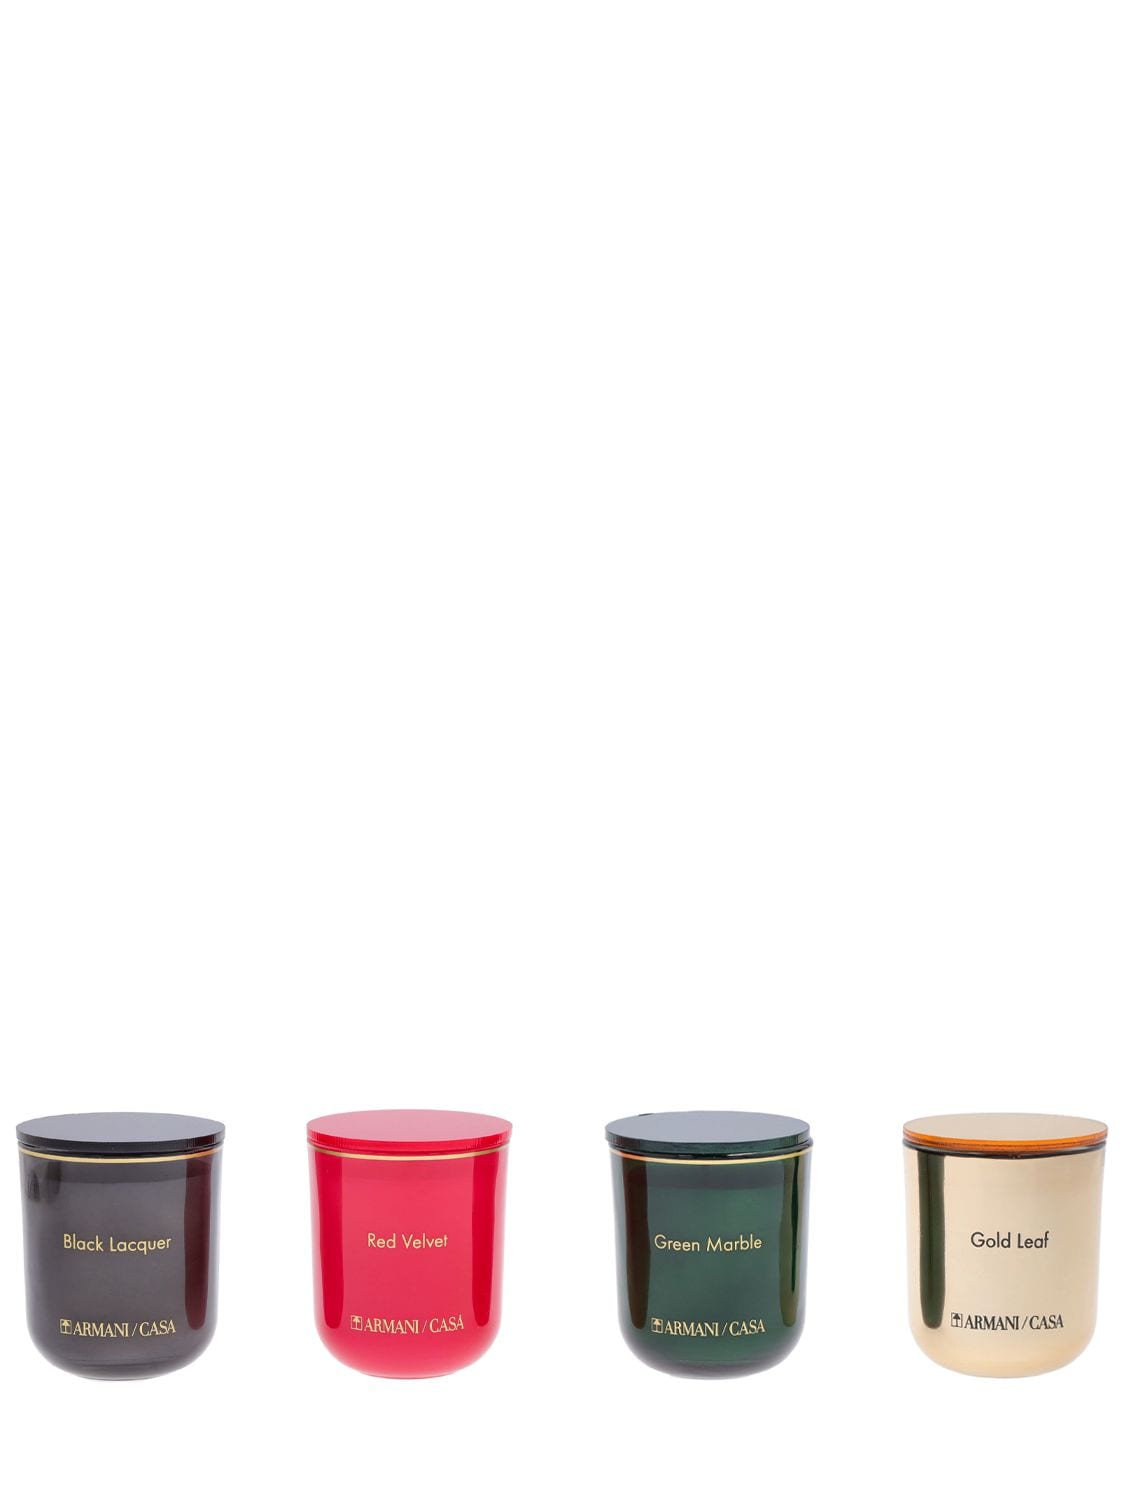 Armani/casa Pegaso迷你香氛蜡烛4个套装 In Multicolor